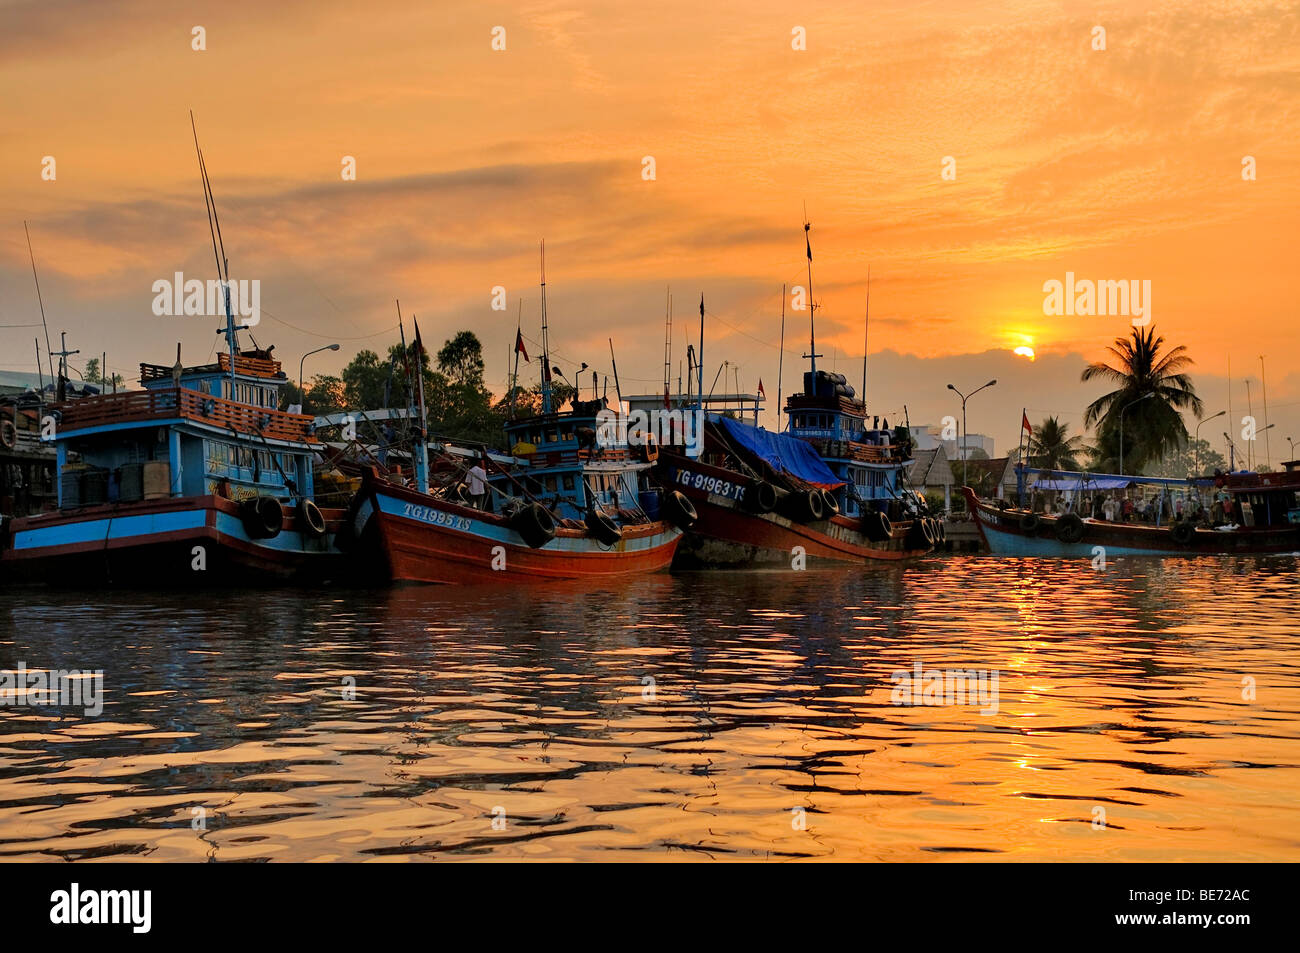 Angelboote/Fischerboote bei Sonnenuntergang auf dem Mekong River, My Tho, Mekong-Delta, Vietnam, Asien Stockfoto